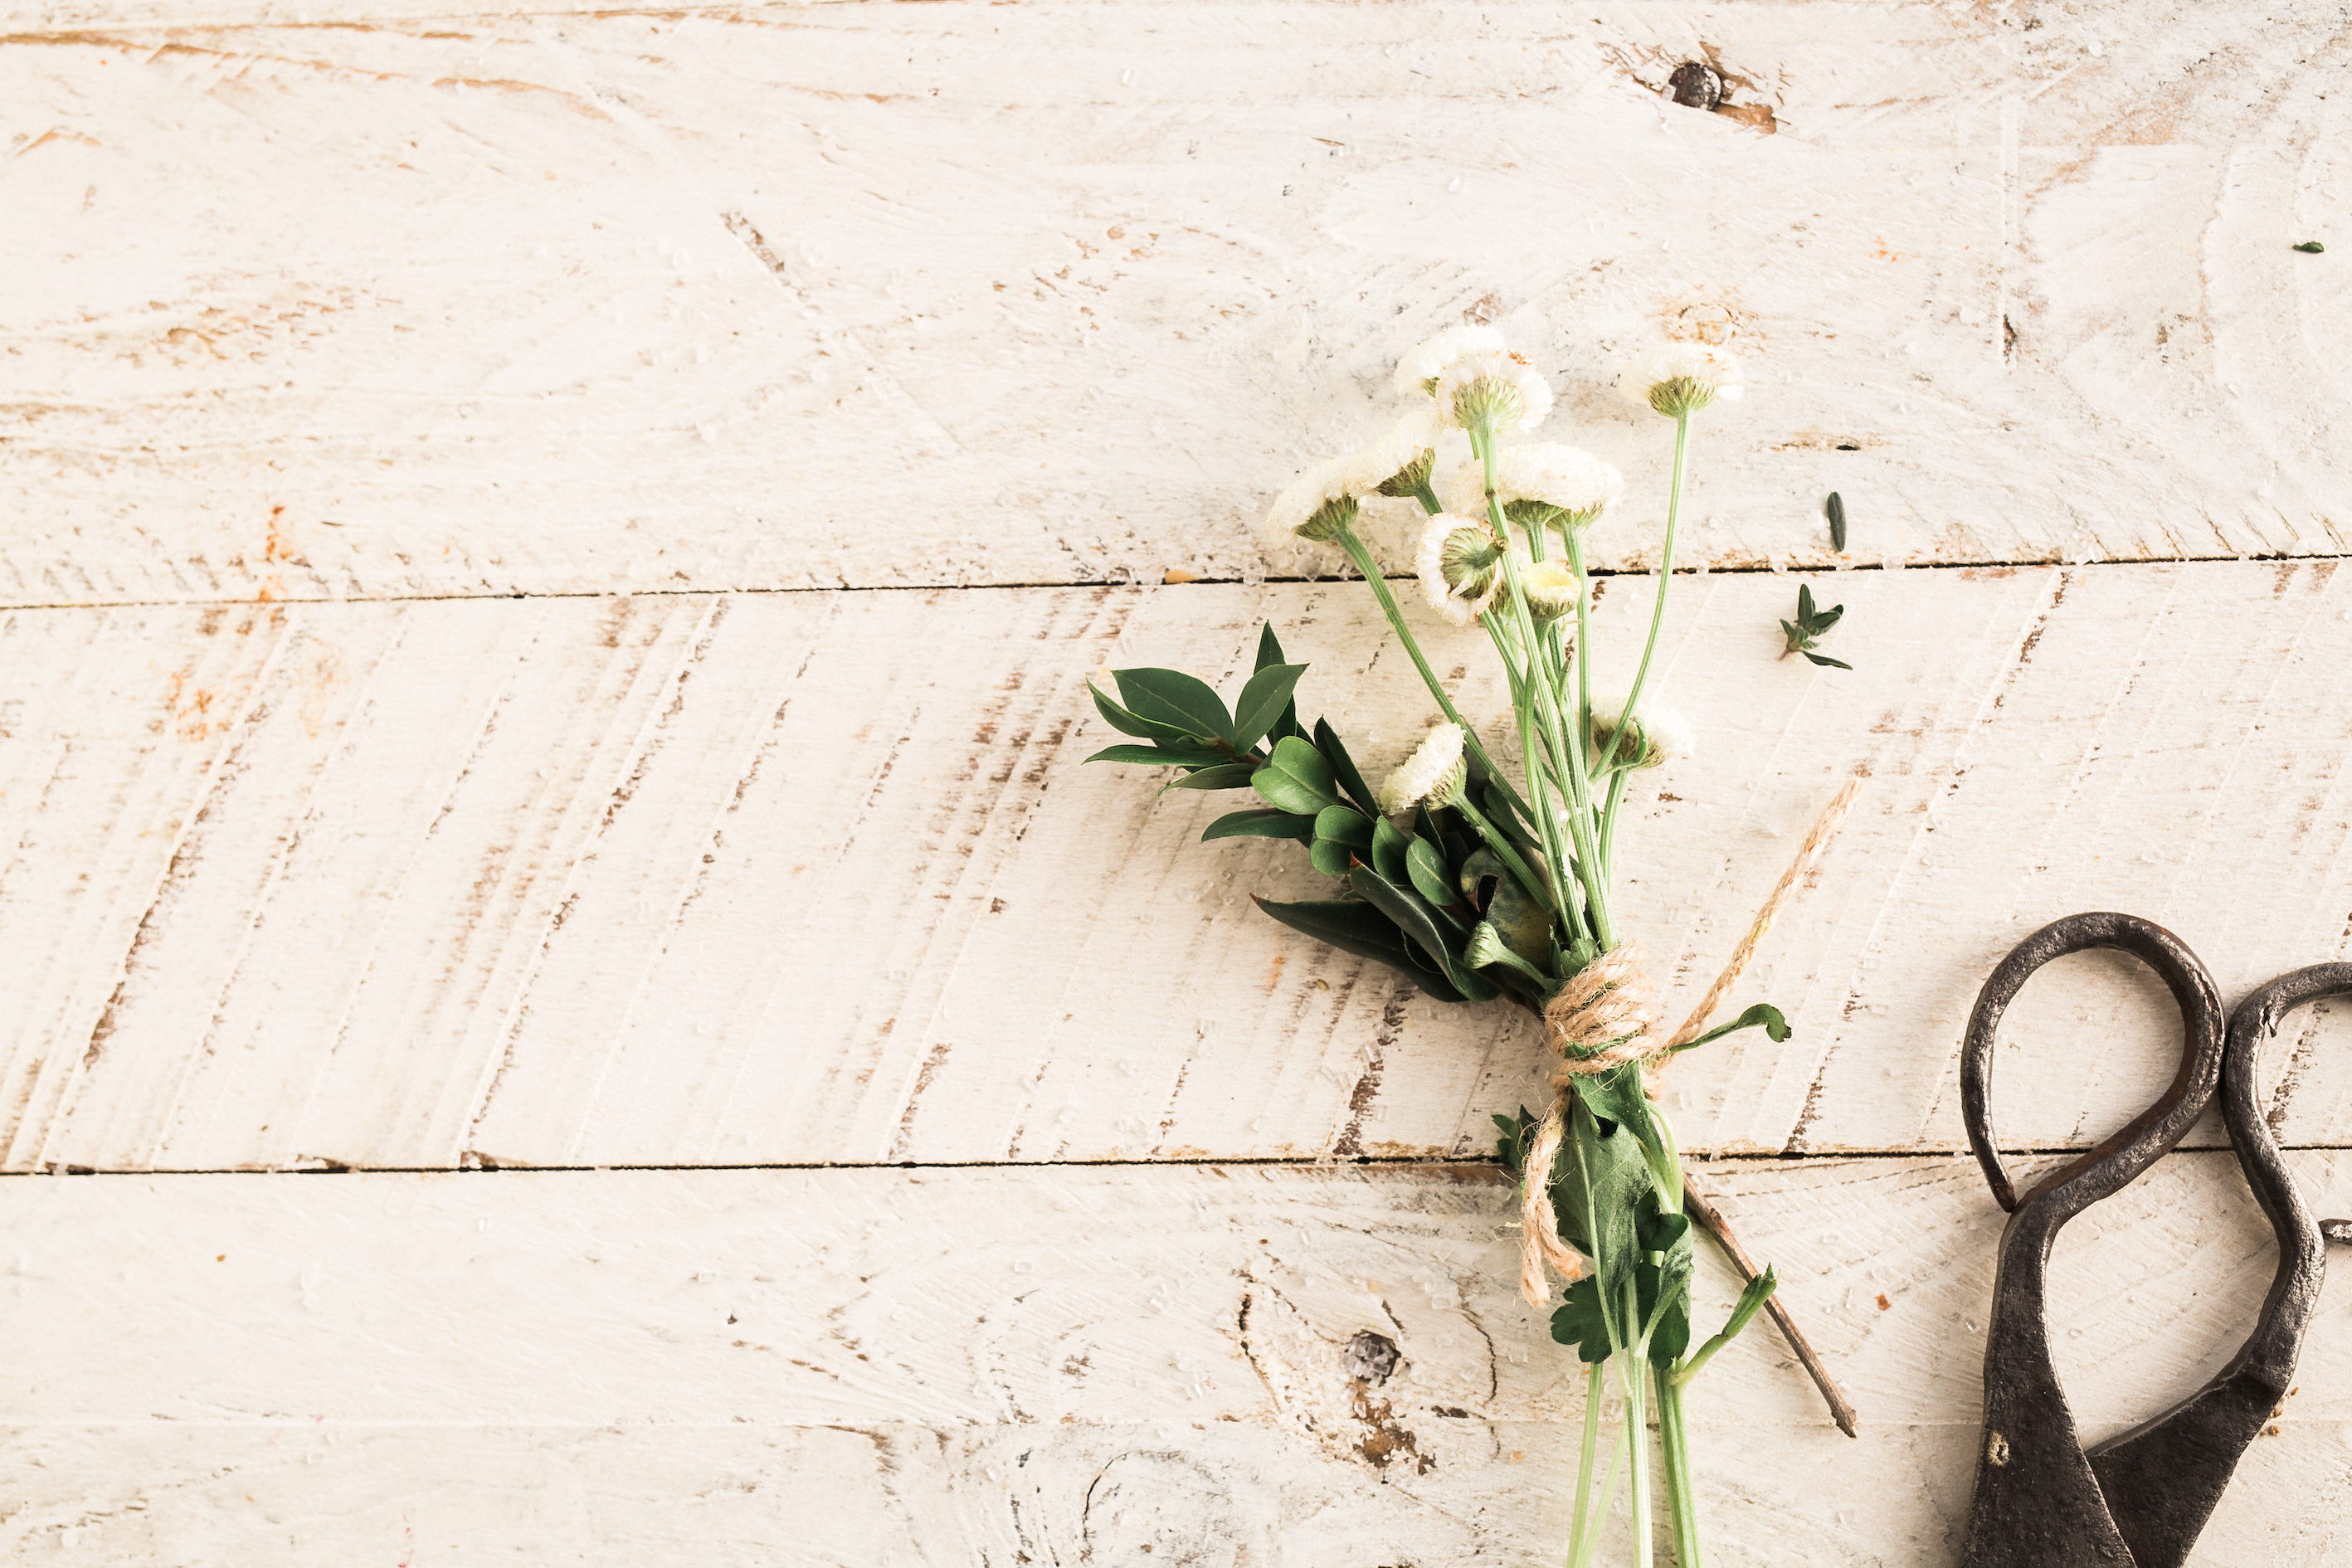 En liten bukett med blommor ligger bredvid en sax på ett gammalt vitt bord.